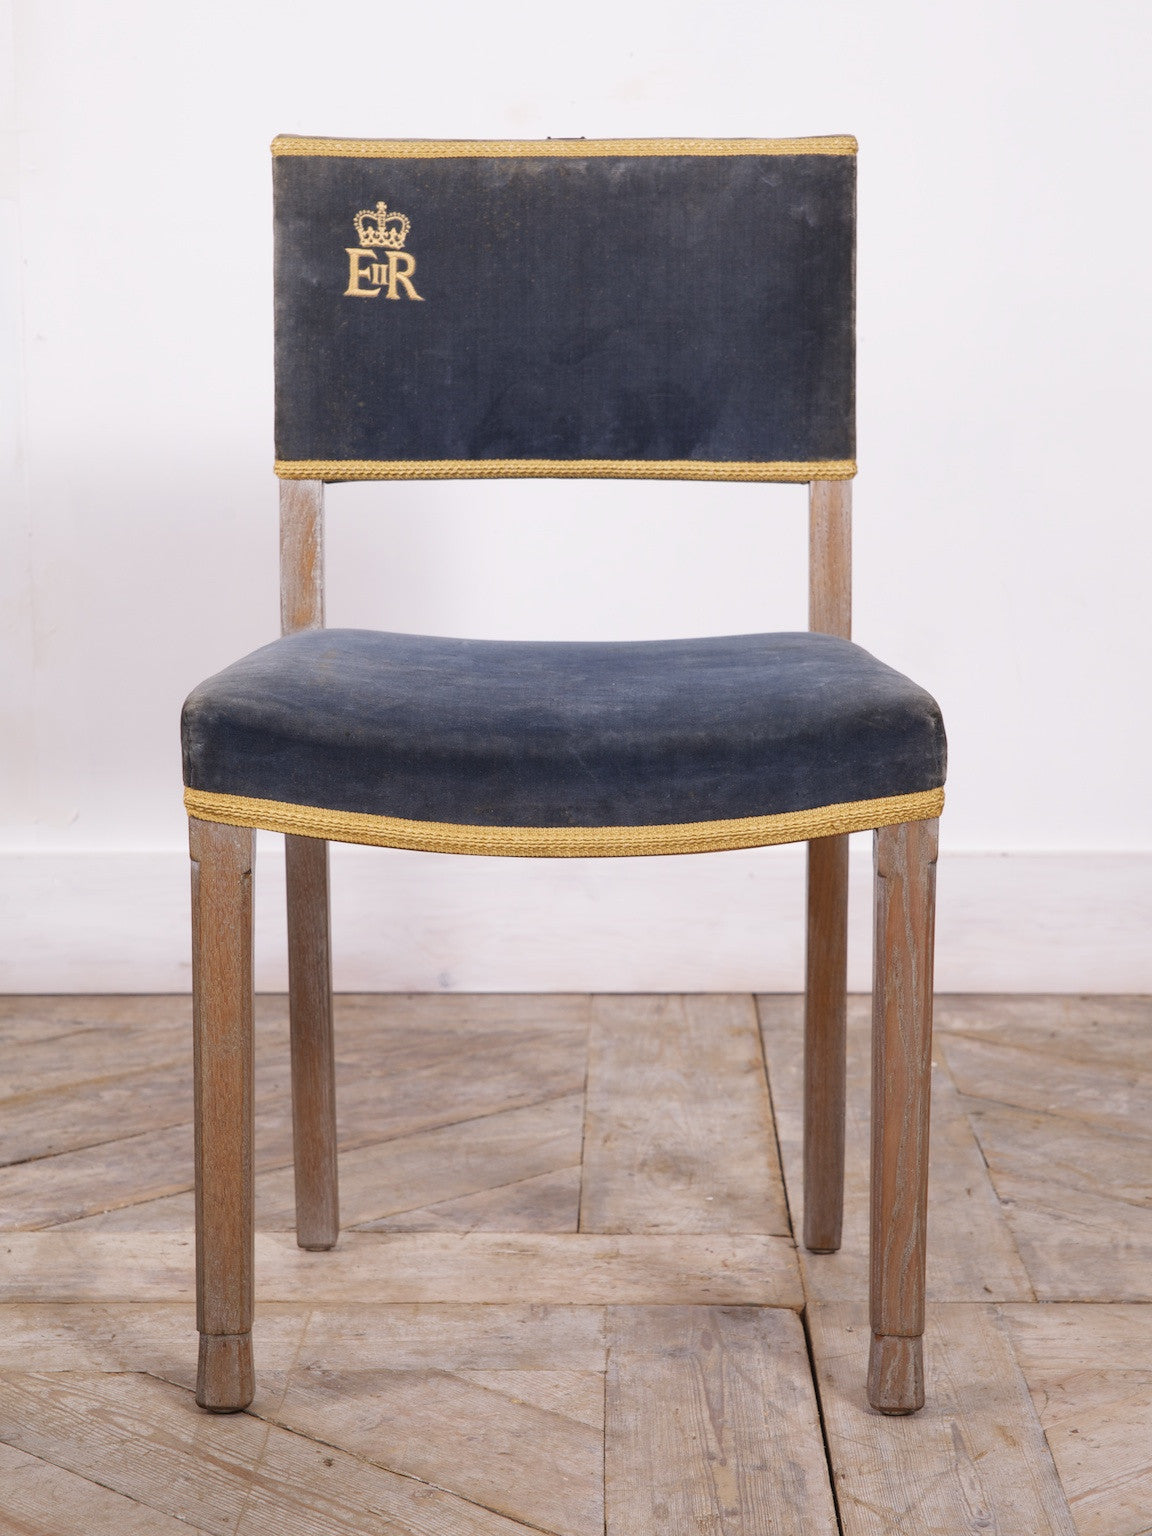 Er Ii Coronation Chair Stools Drew Pritchard Ltd